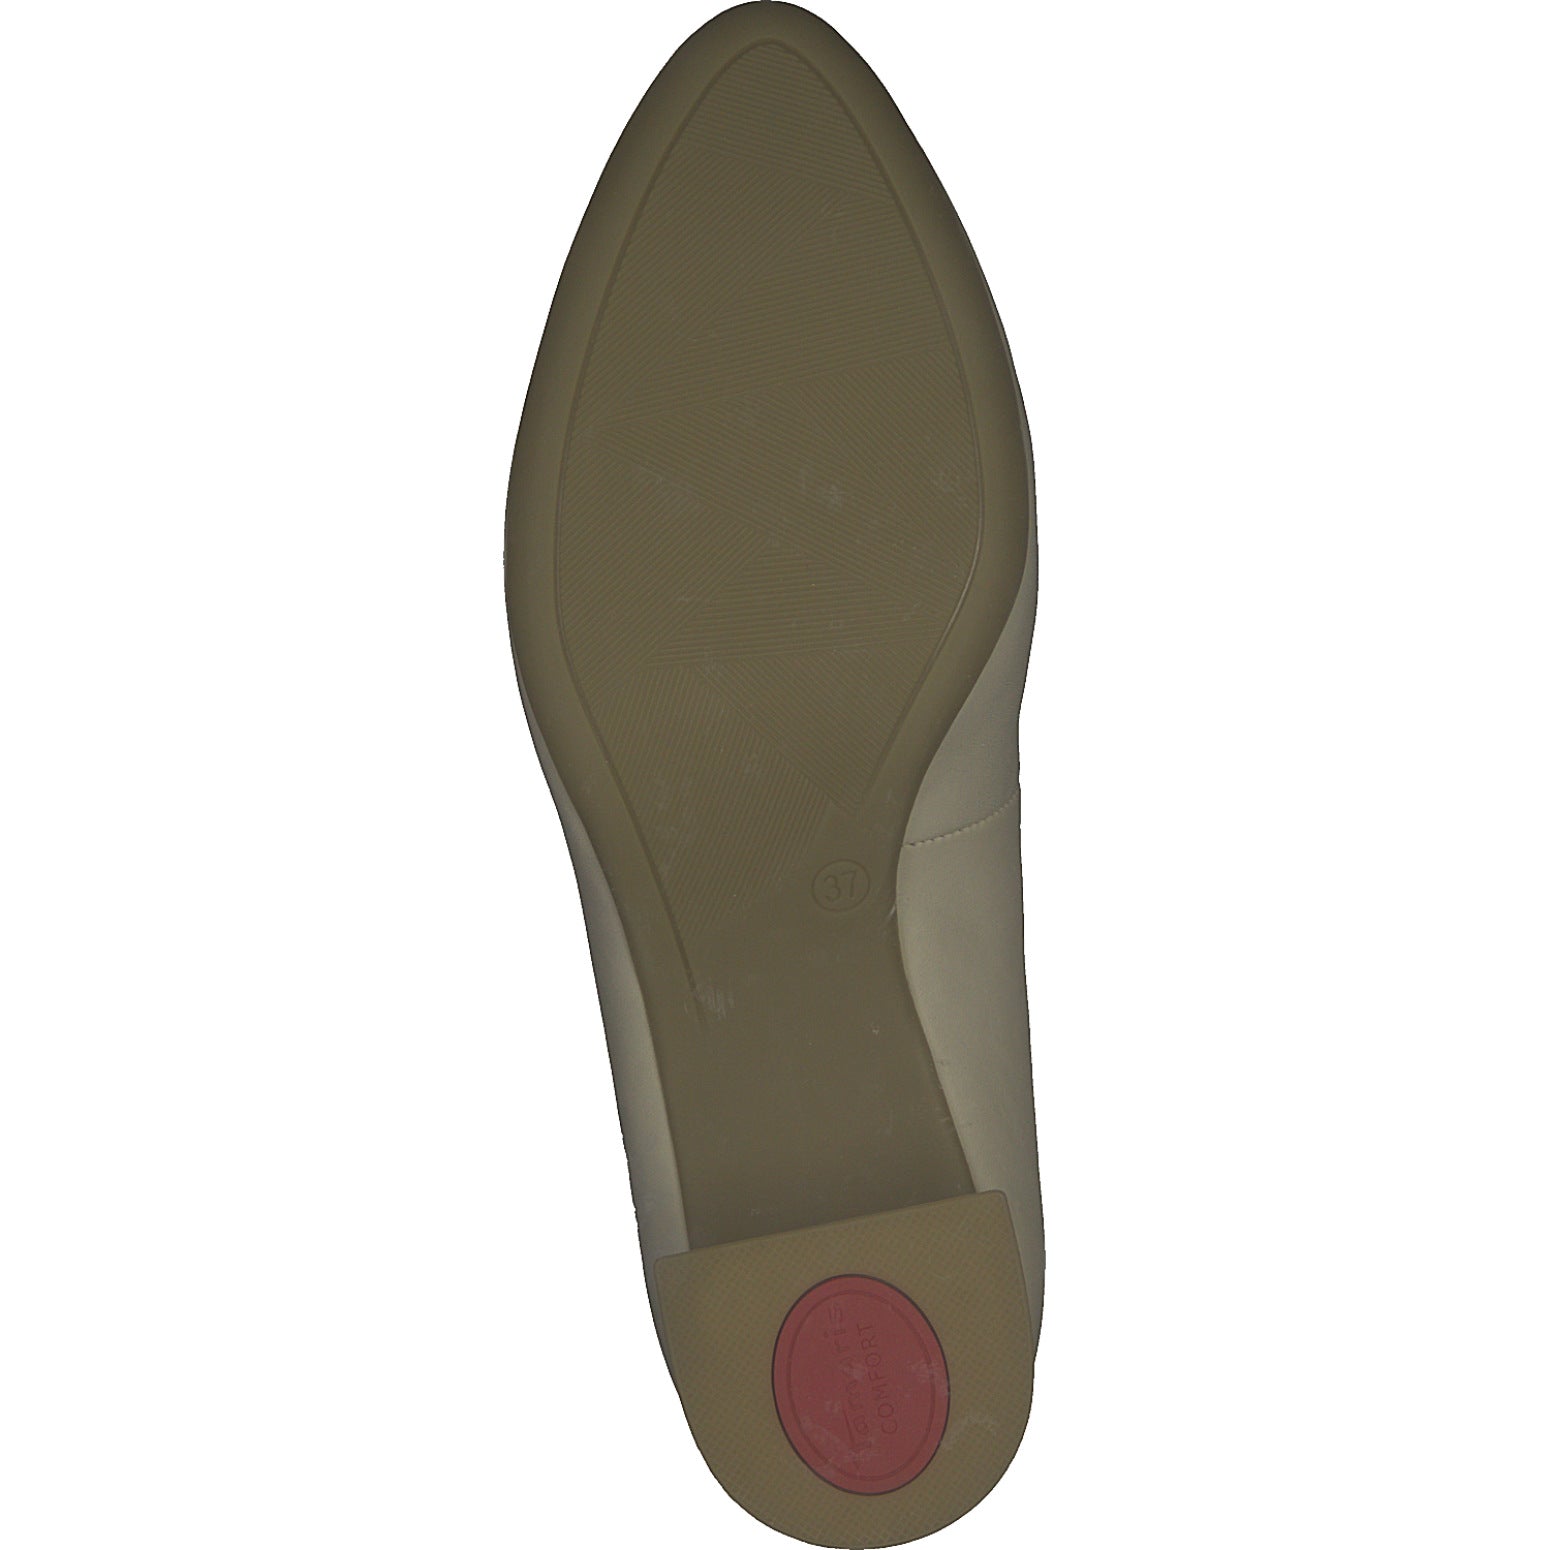 Tamaris 008-52300-20-411 - Grande et jolie - chaussures grandes tailles femme